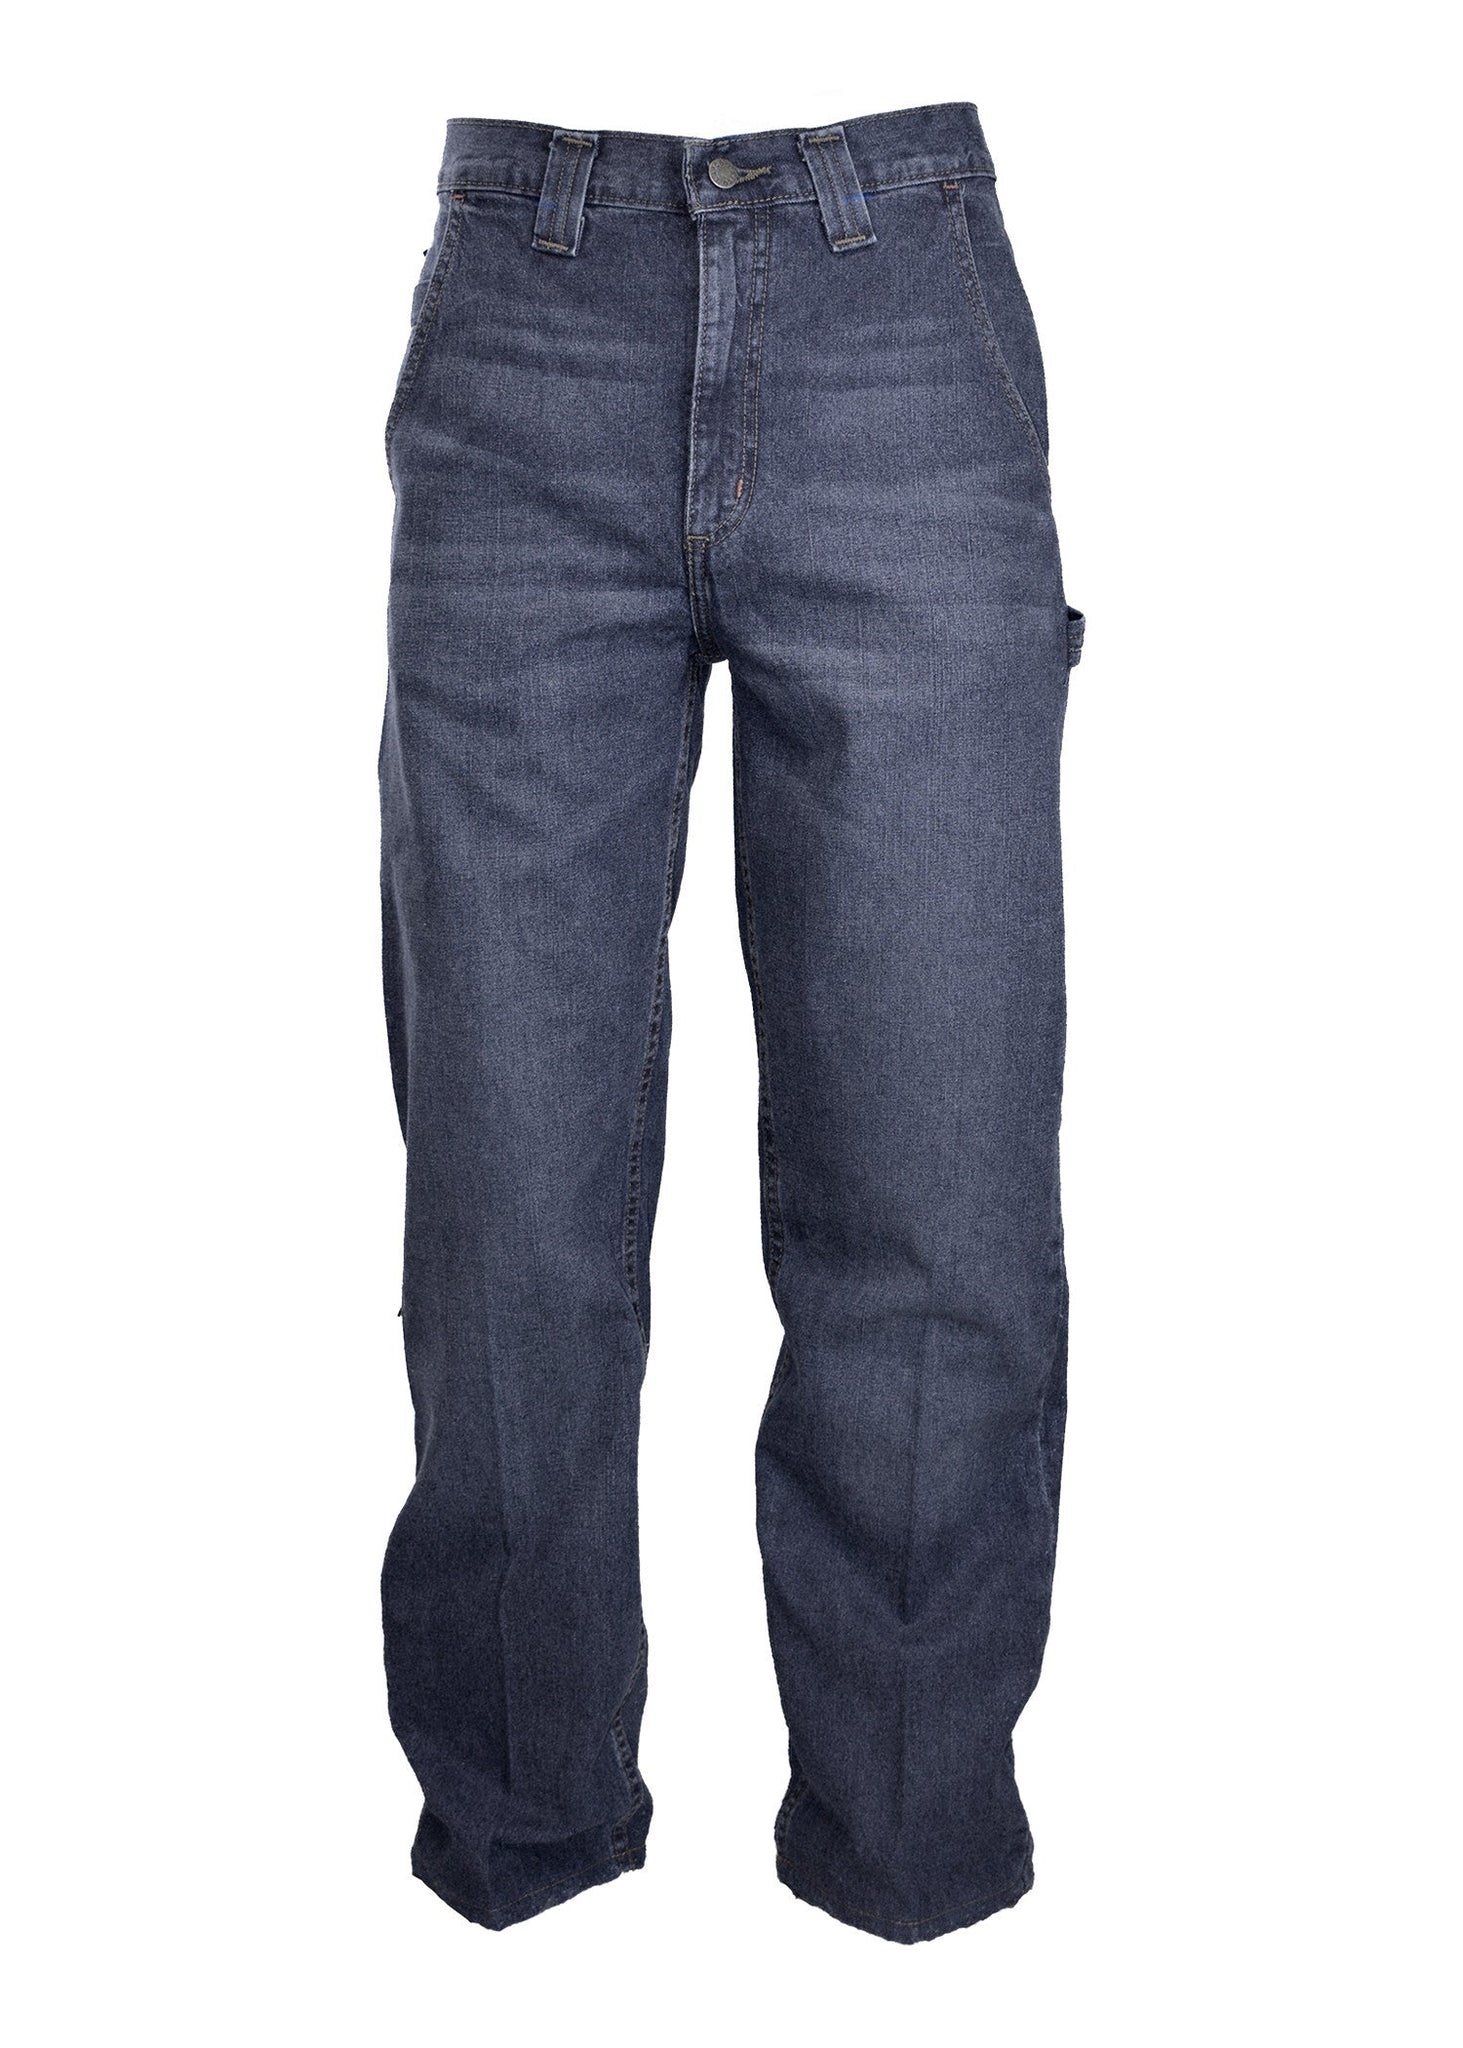 Wholesale Dark Blue Denim Fabric For Jeans